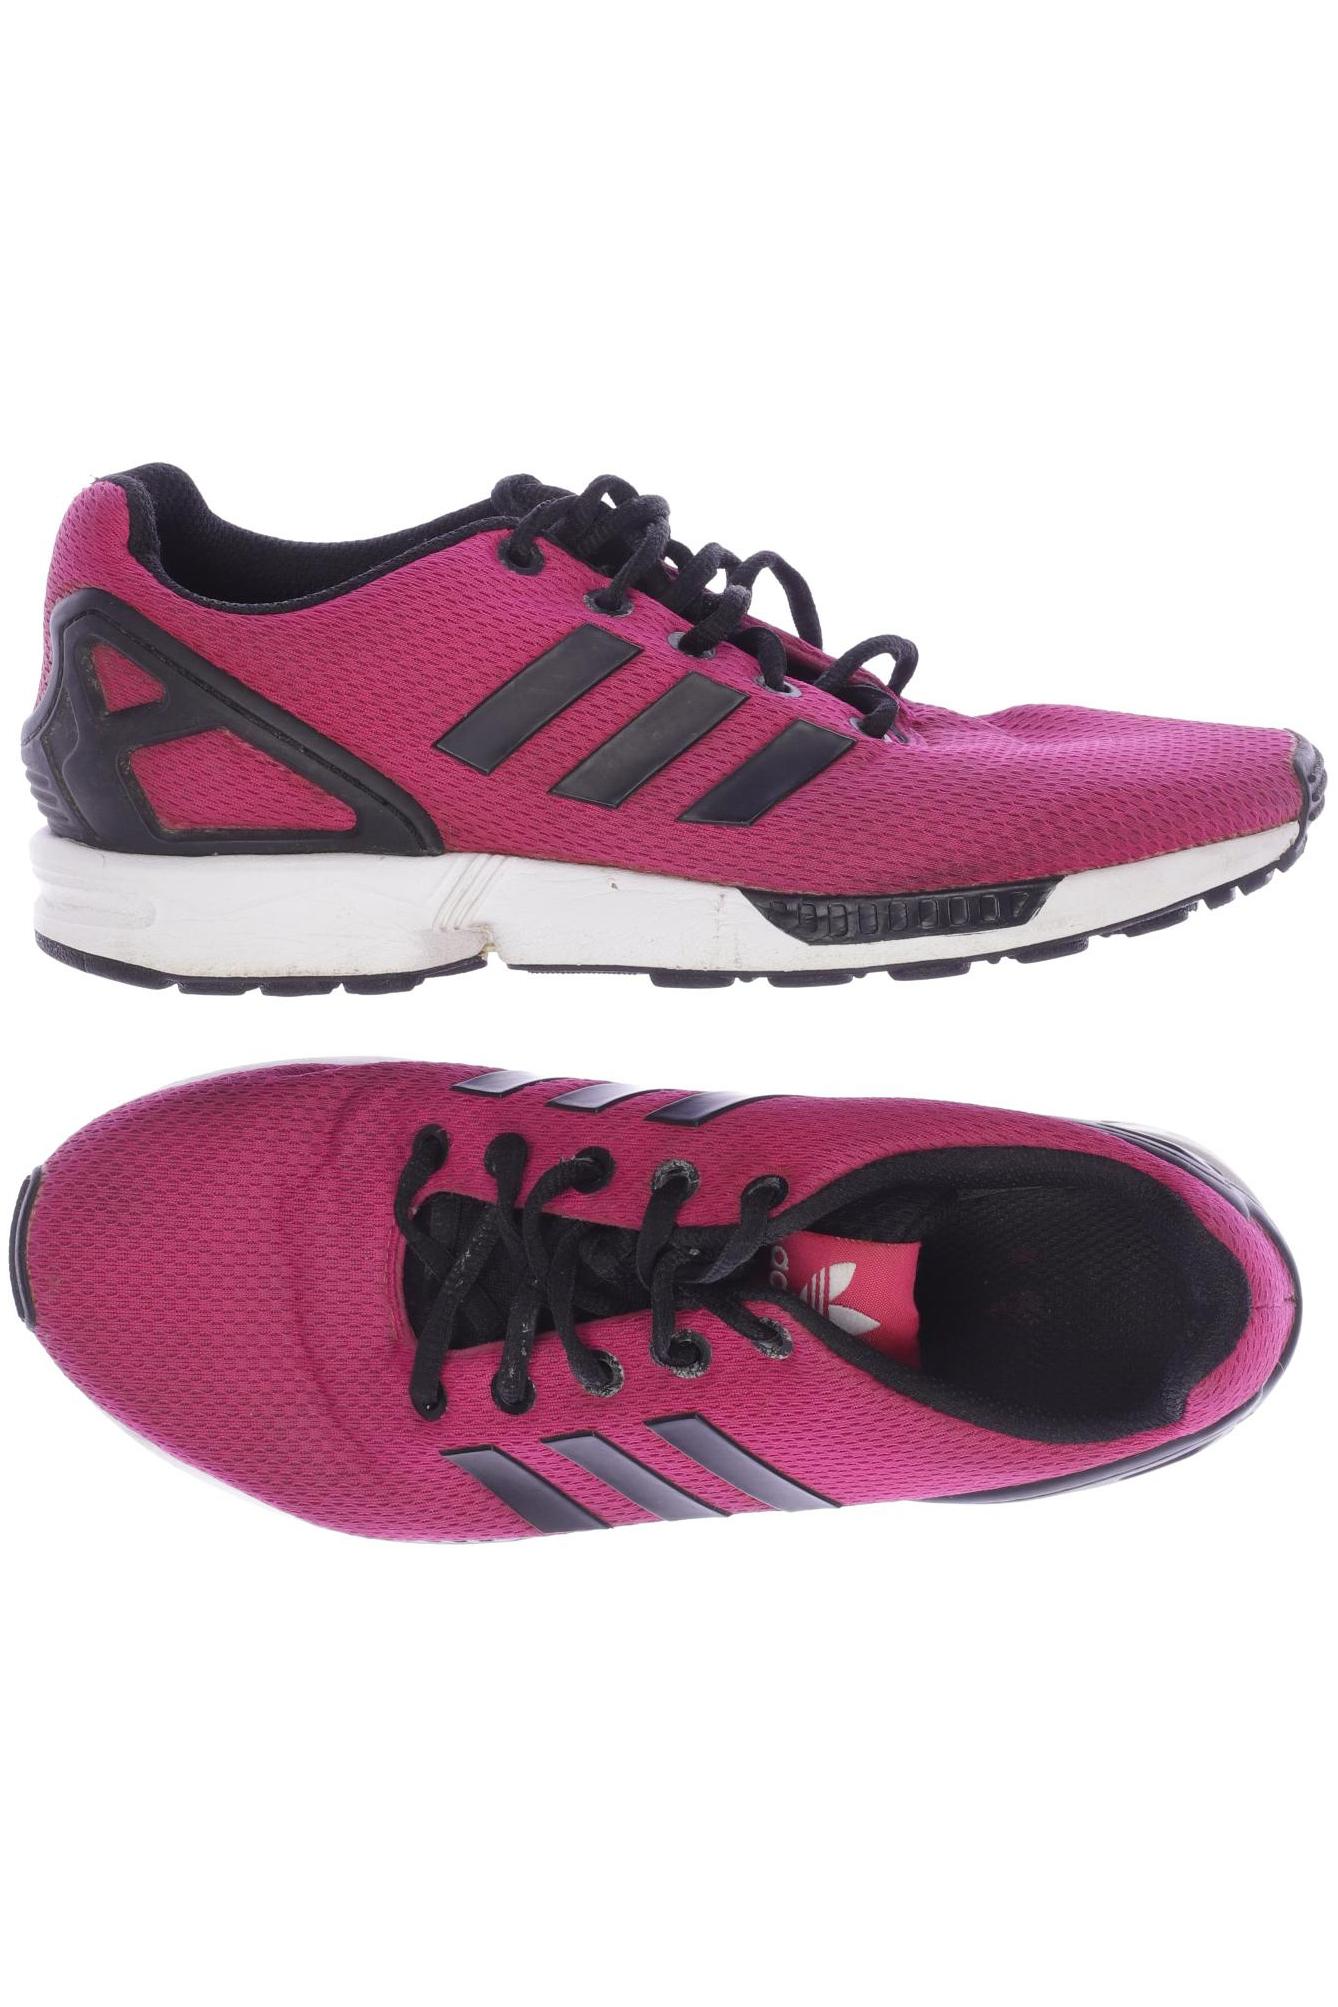 adidas Originals Damen Sneakers, pink von adidas Originals